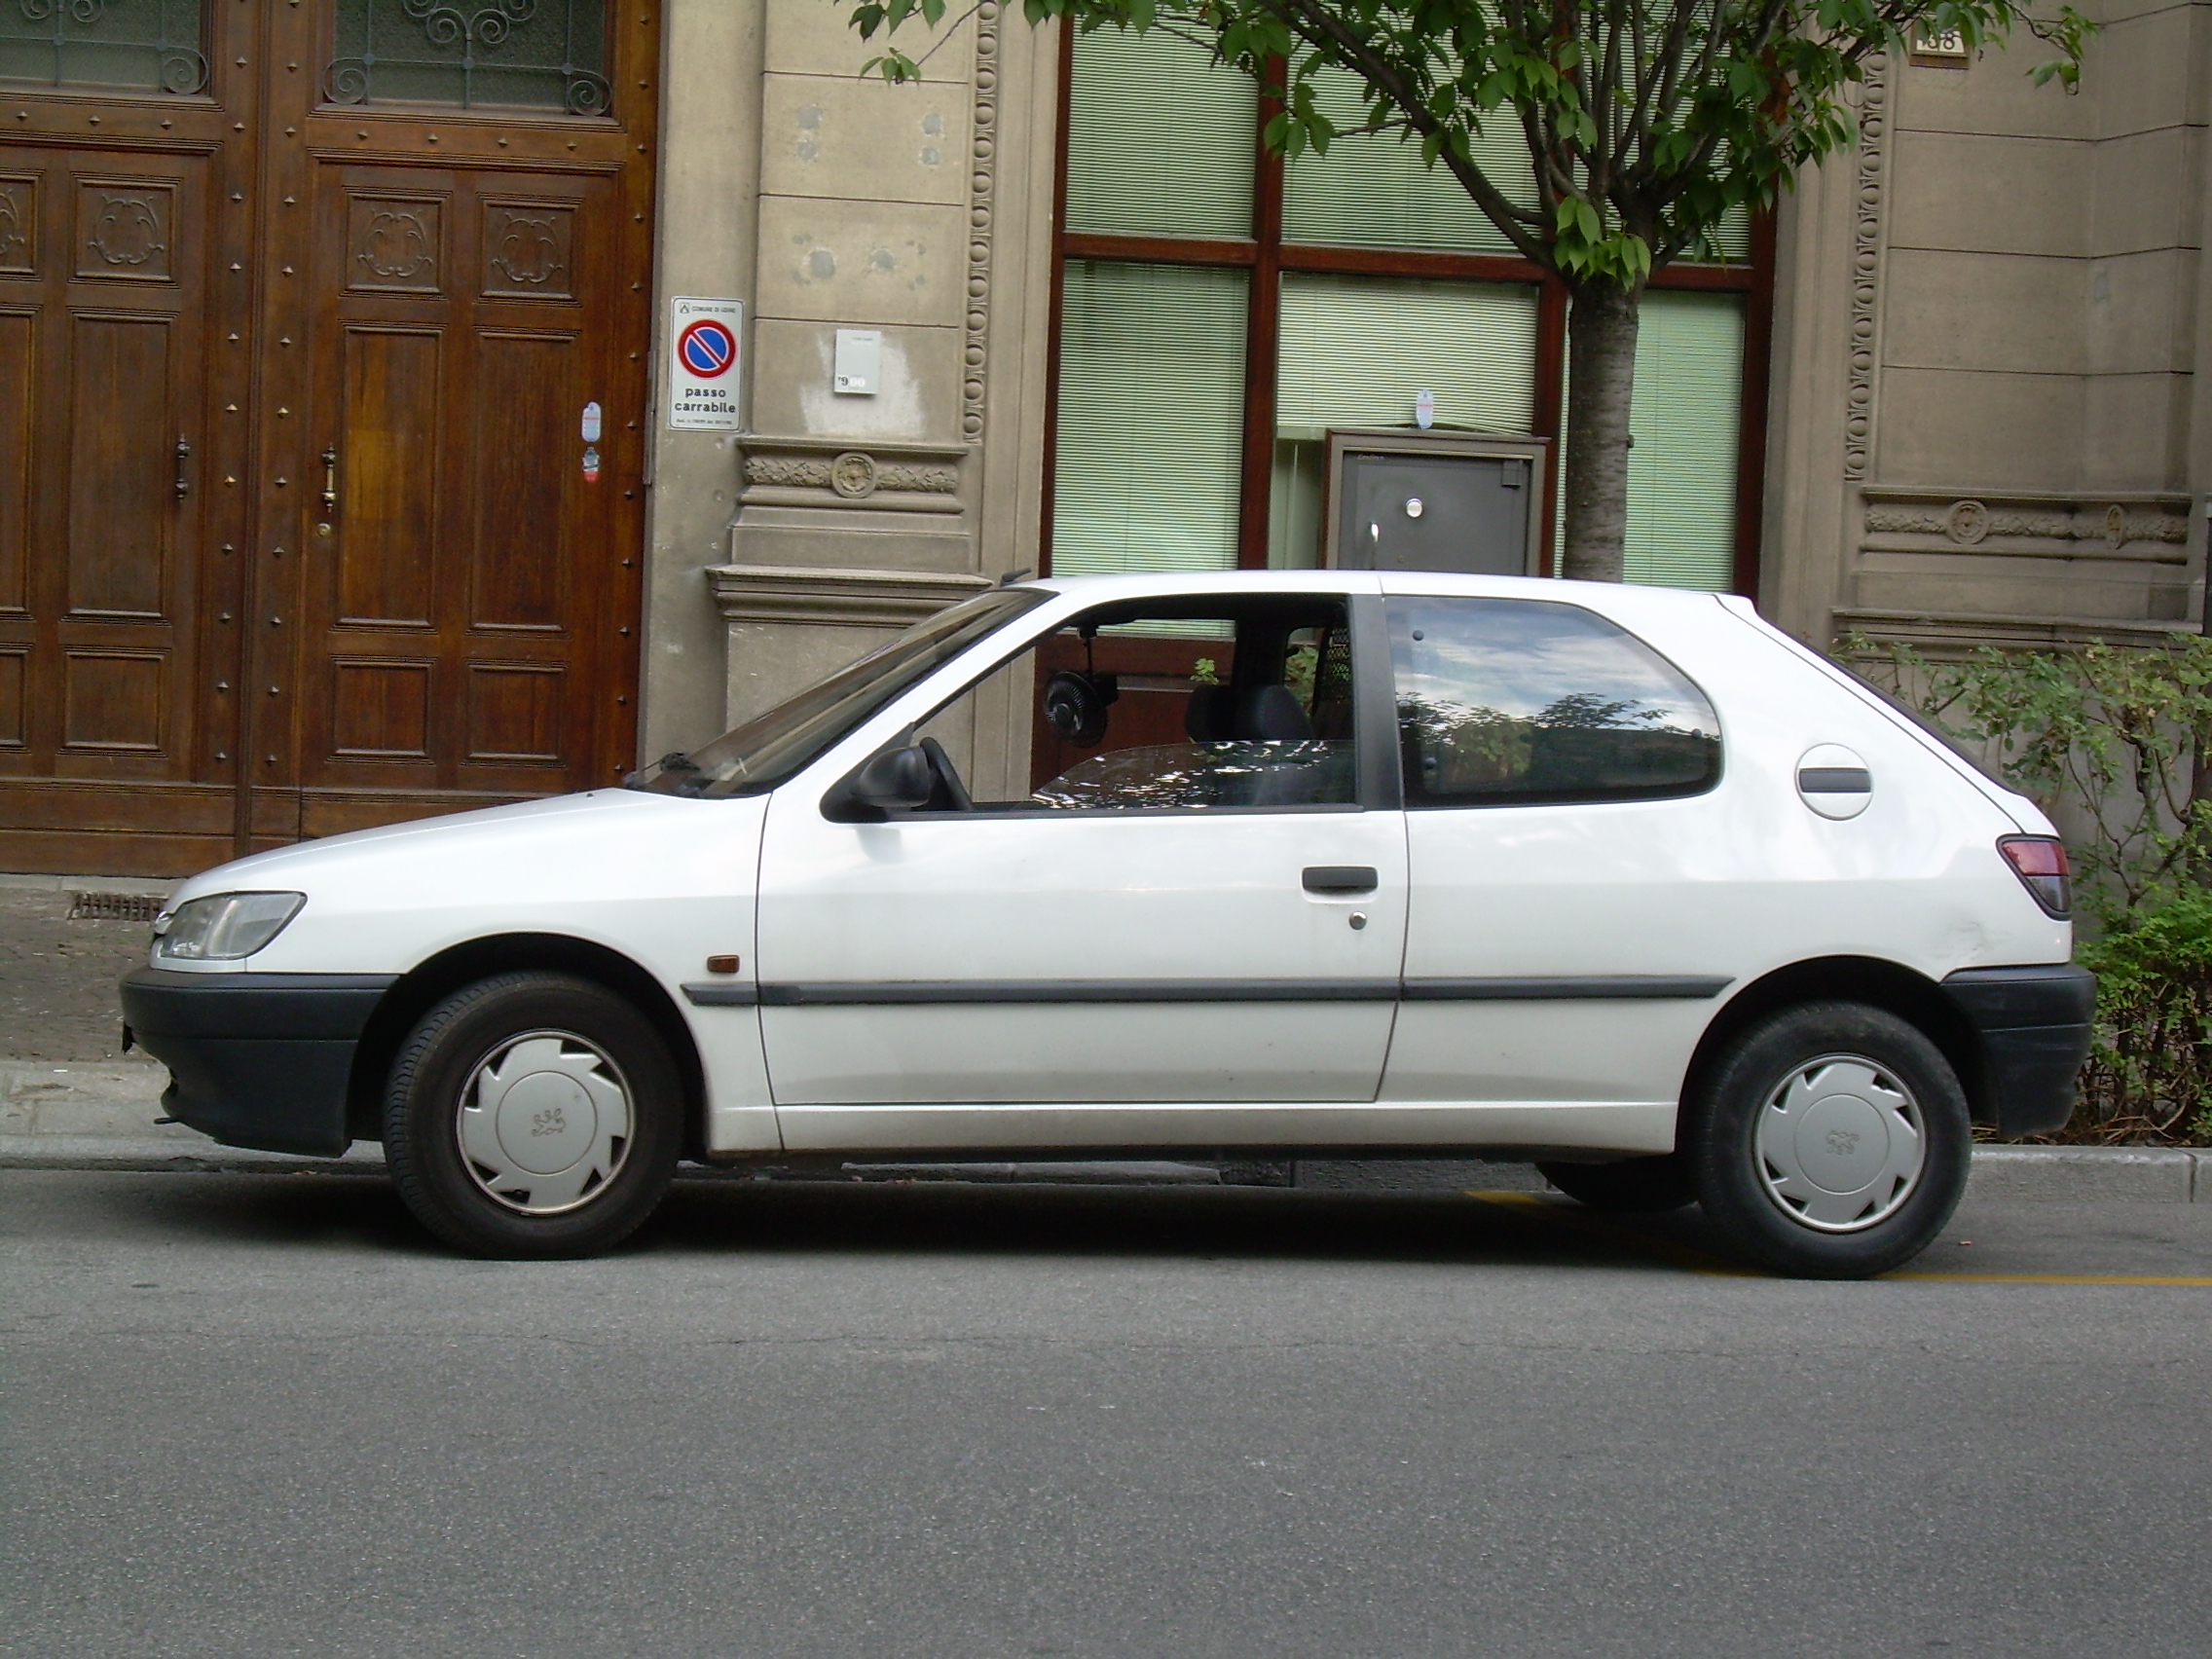 File:Peugeot 306 XAD.JPG - Wikimedia Commons